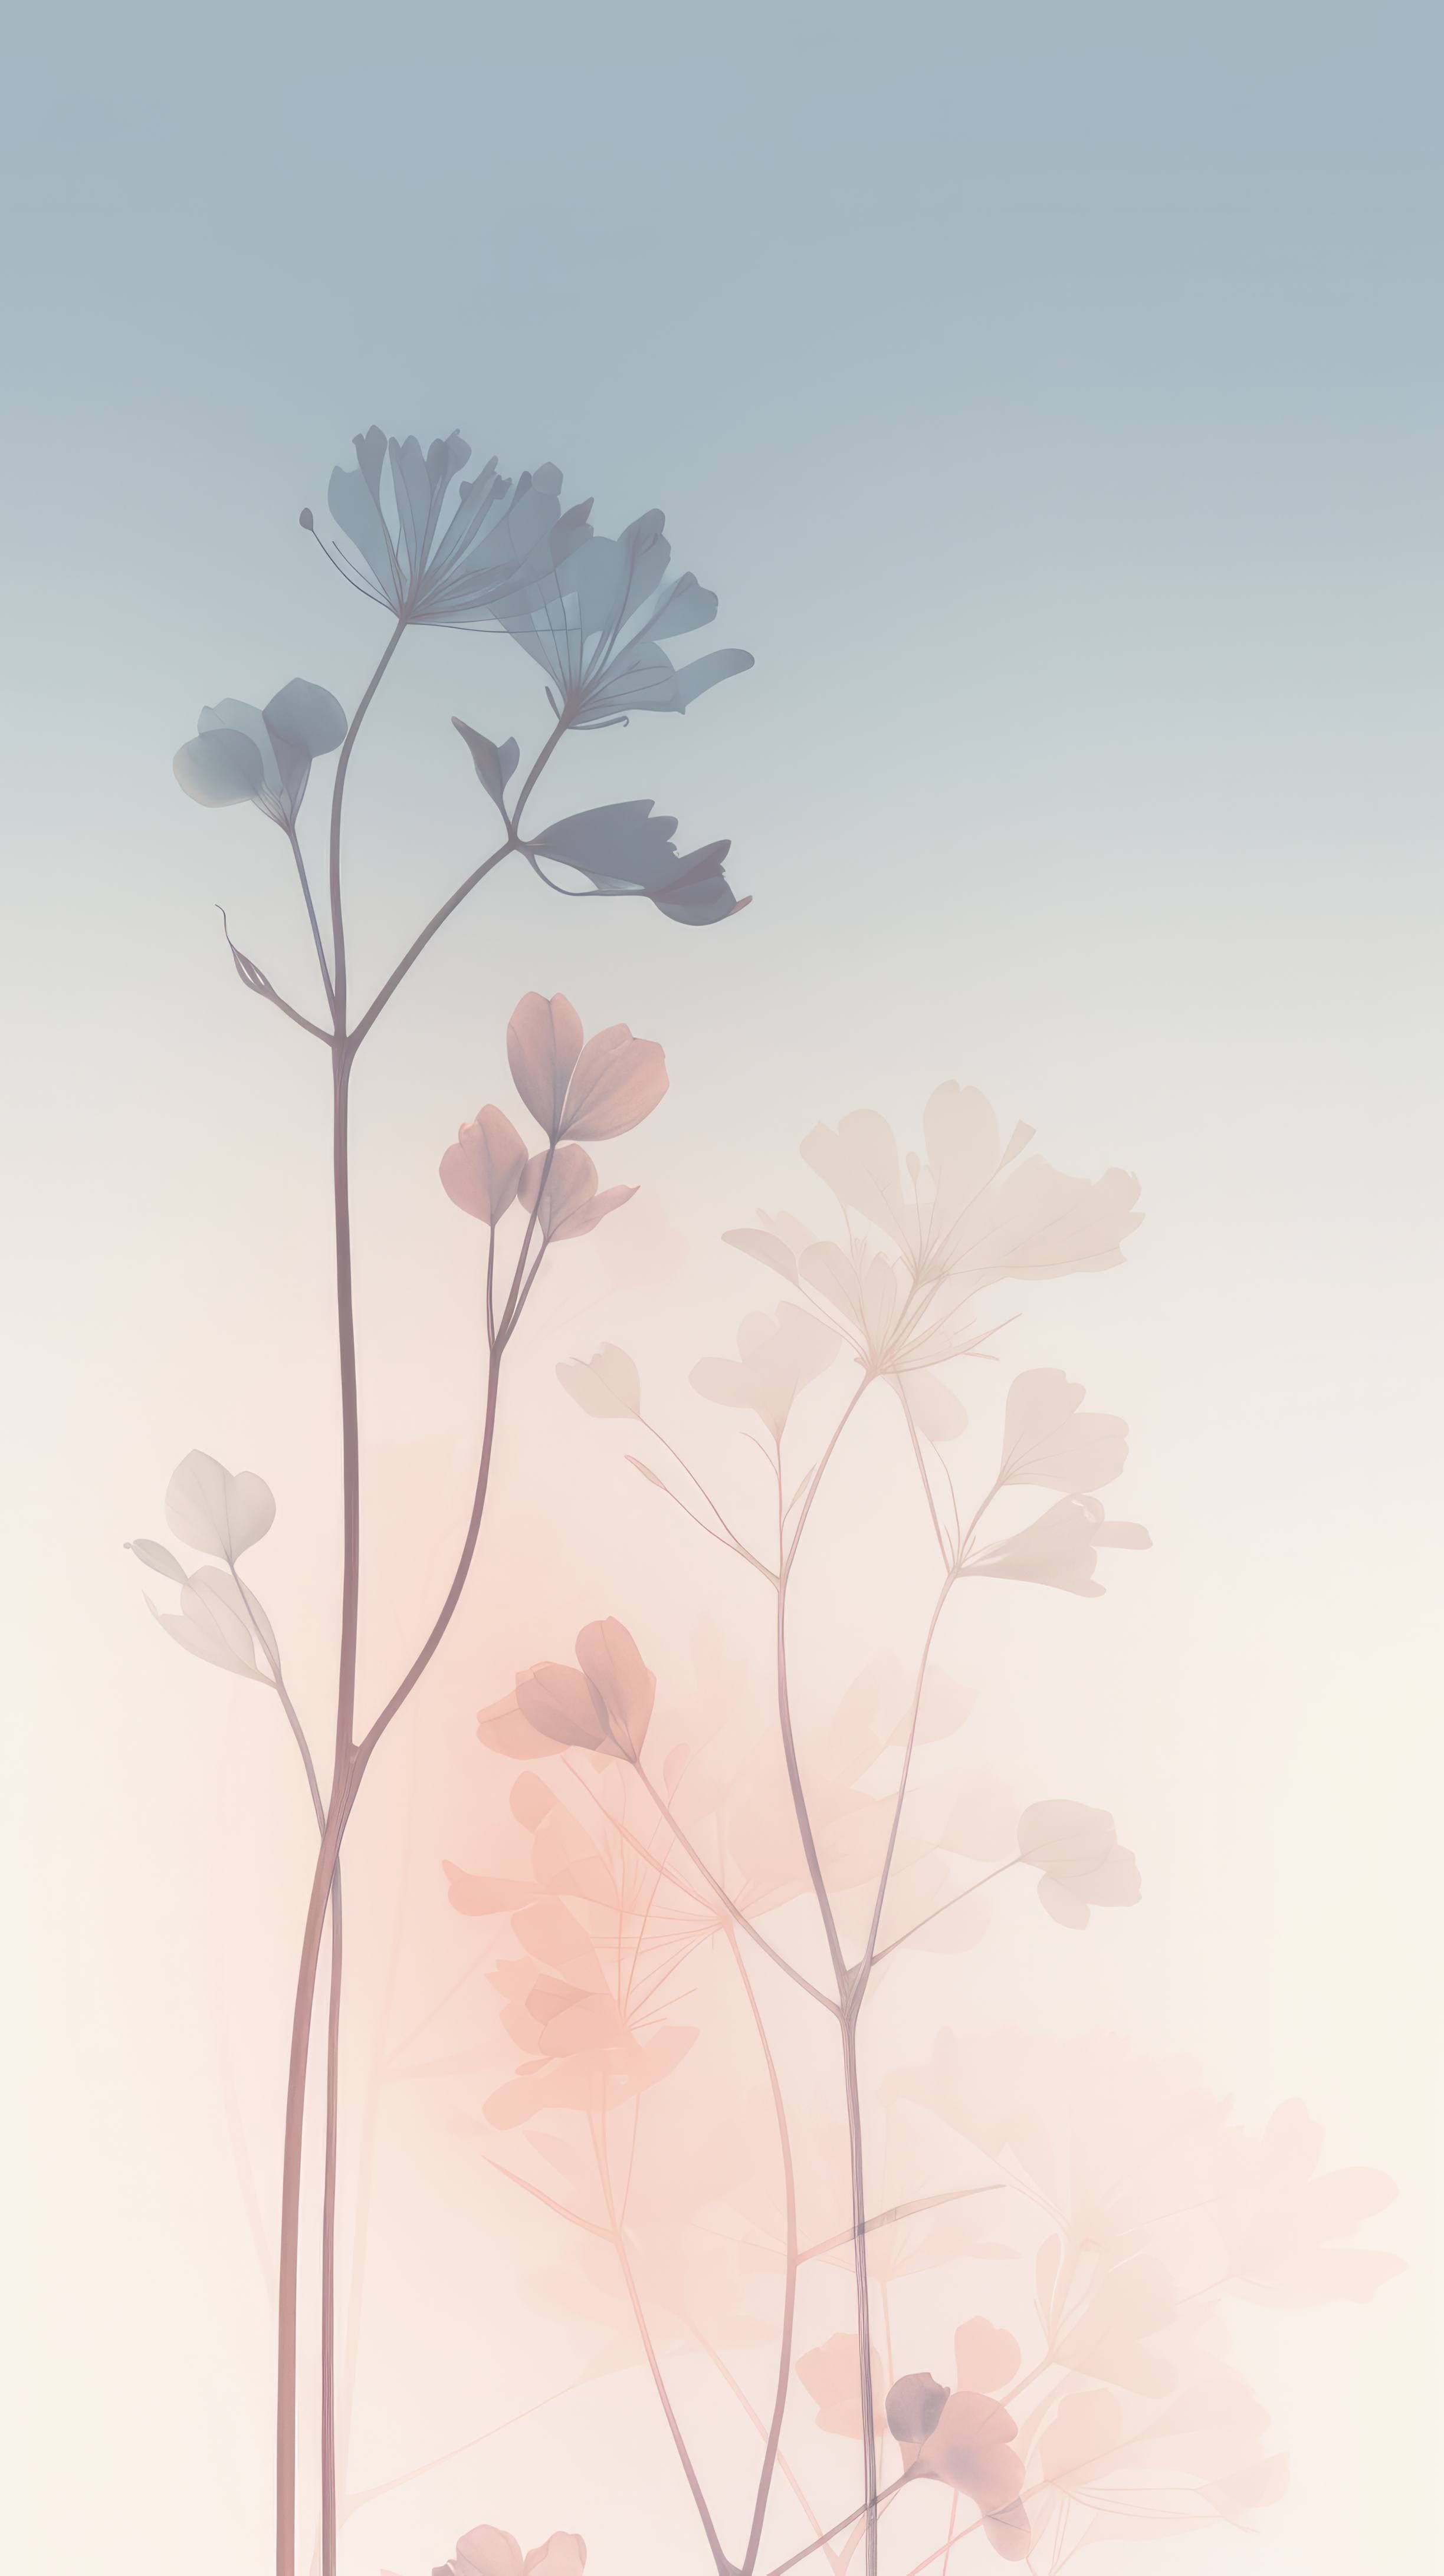 Free AI art image of minimalist flora background